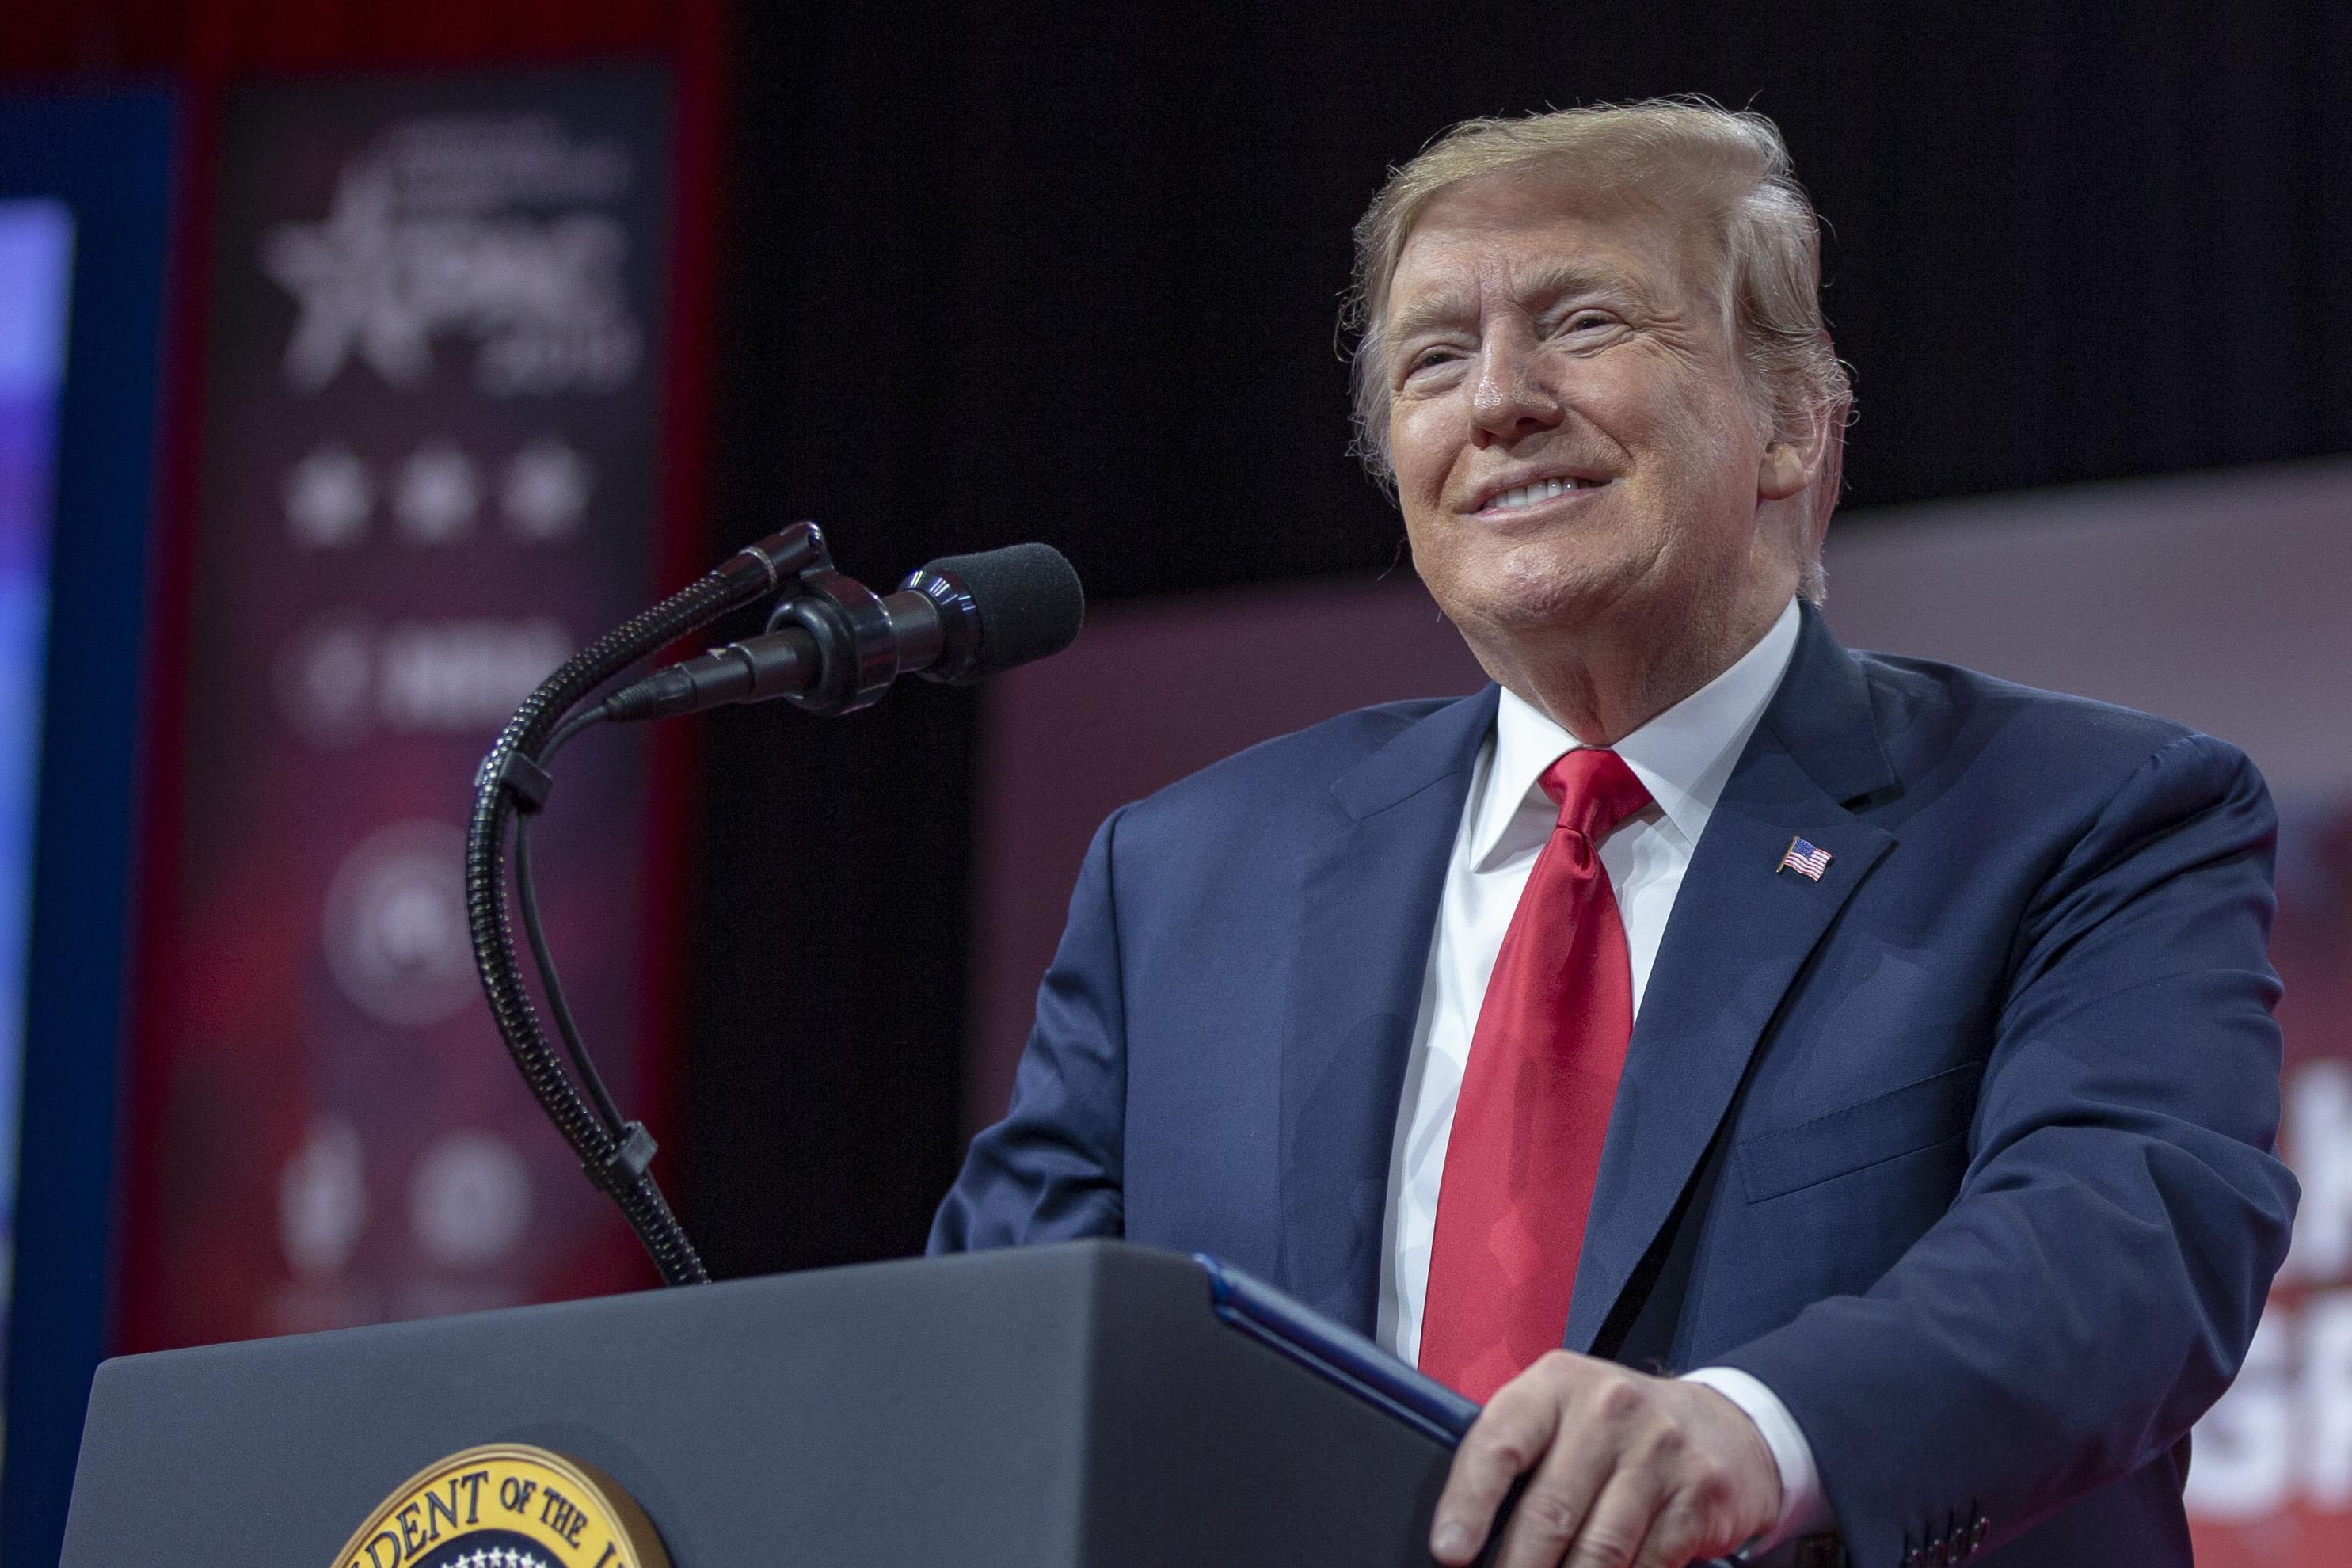 President Donald Trump smiling during a speech